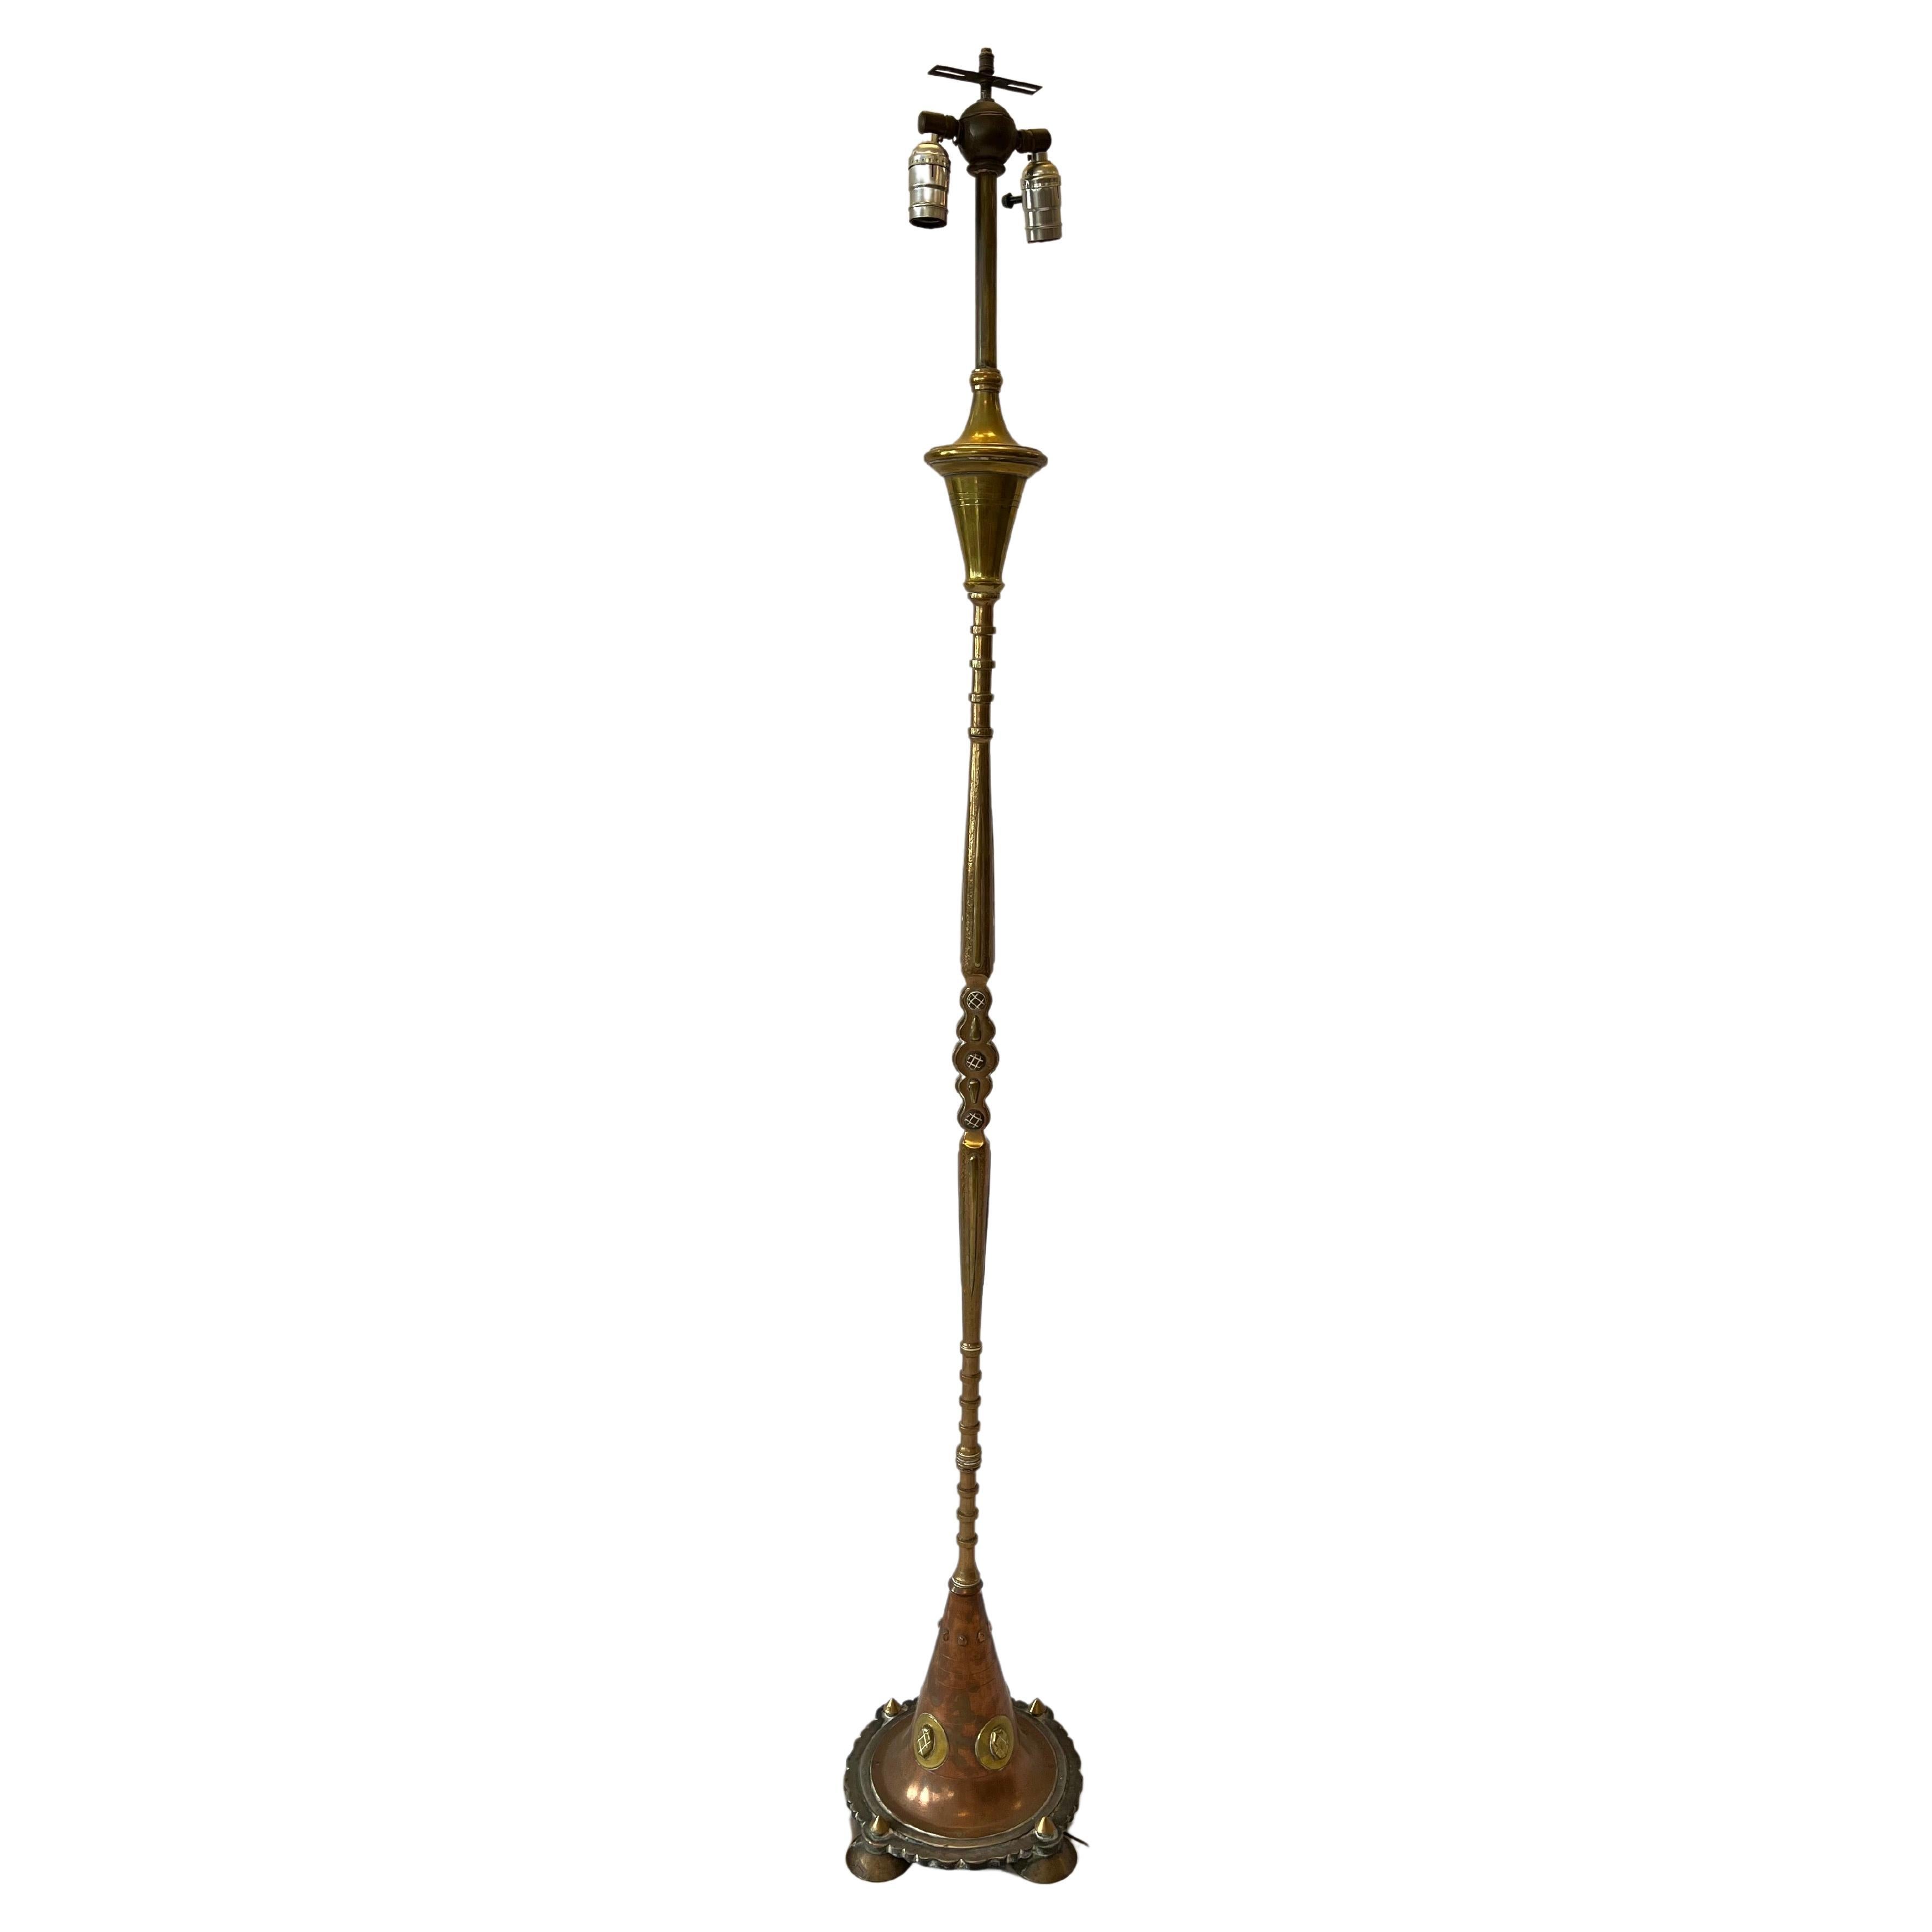 Antique Copper Brass Mixed Metal Ornate Moorish Style Hand Crafted Floor Lamp (lampe de sol de style mauresque)